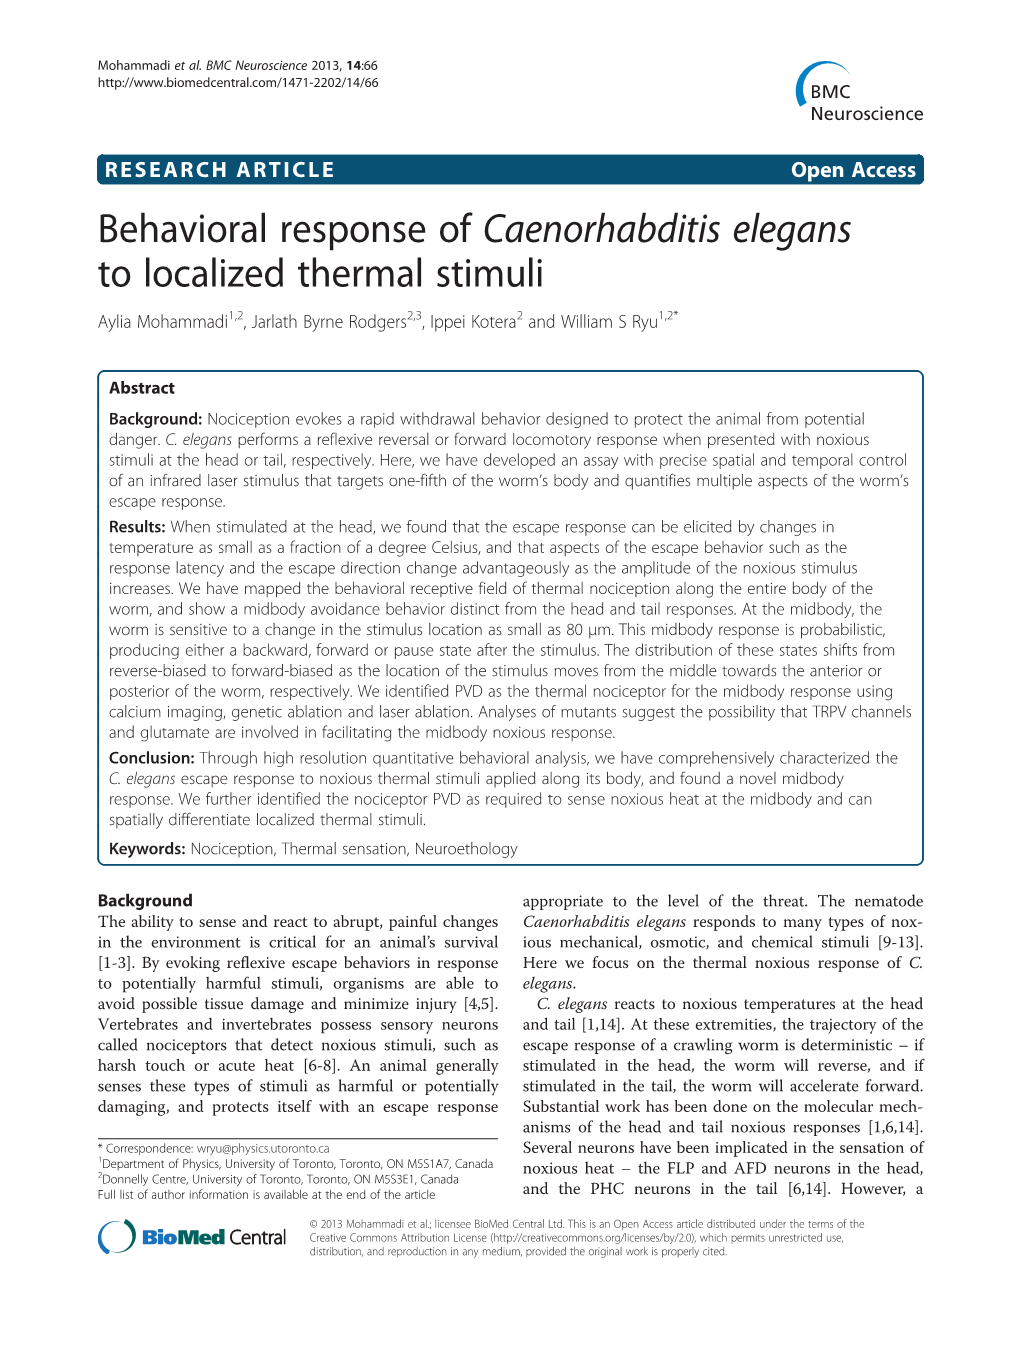 Behavioral Response of Caenorhabditis Elegans to Localized Thermal Stimuli Aylia Mohammadi1,2, Jarlath Byrne Rodgers2,3, Ippei Kotera2 and William S Ryu1,2*